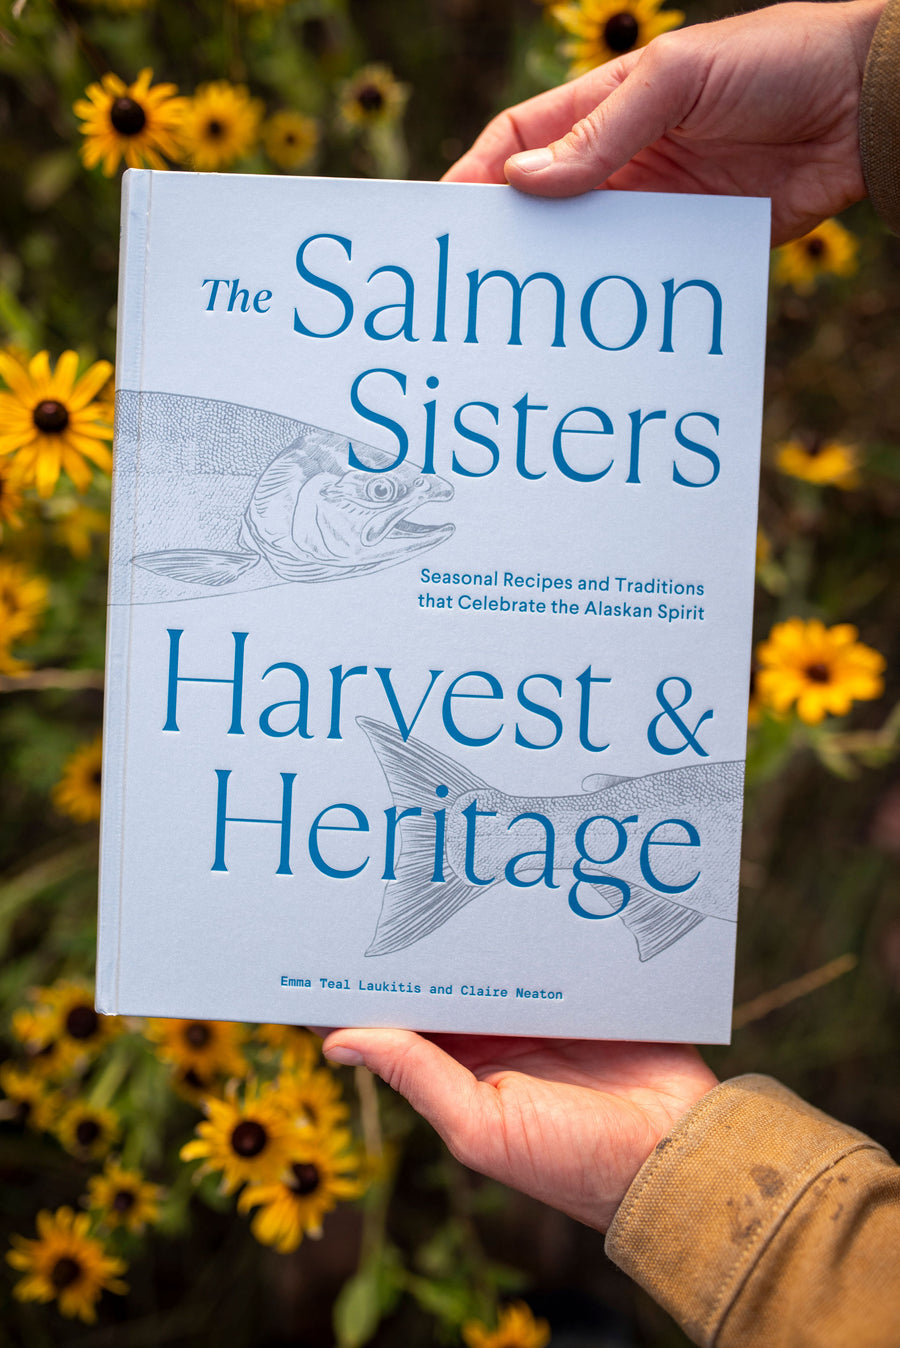 The Salmon Sisters: Harvest & Heritage